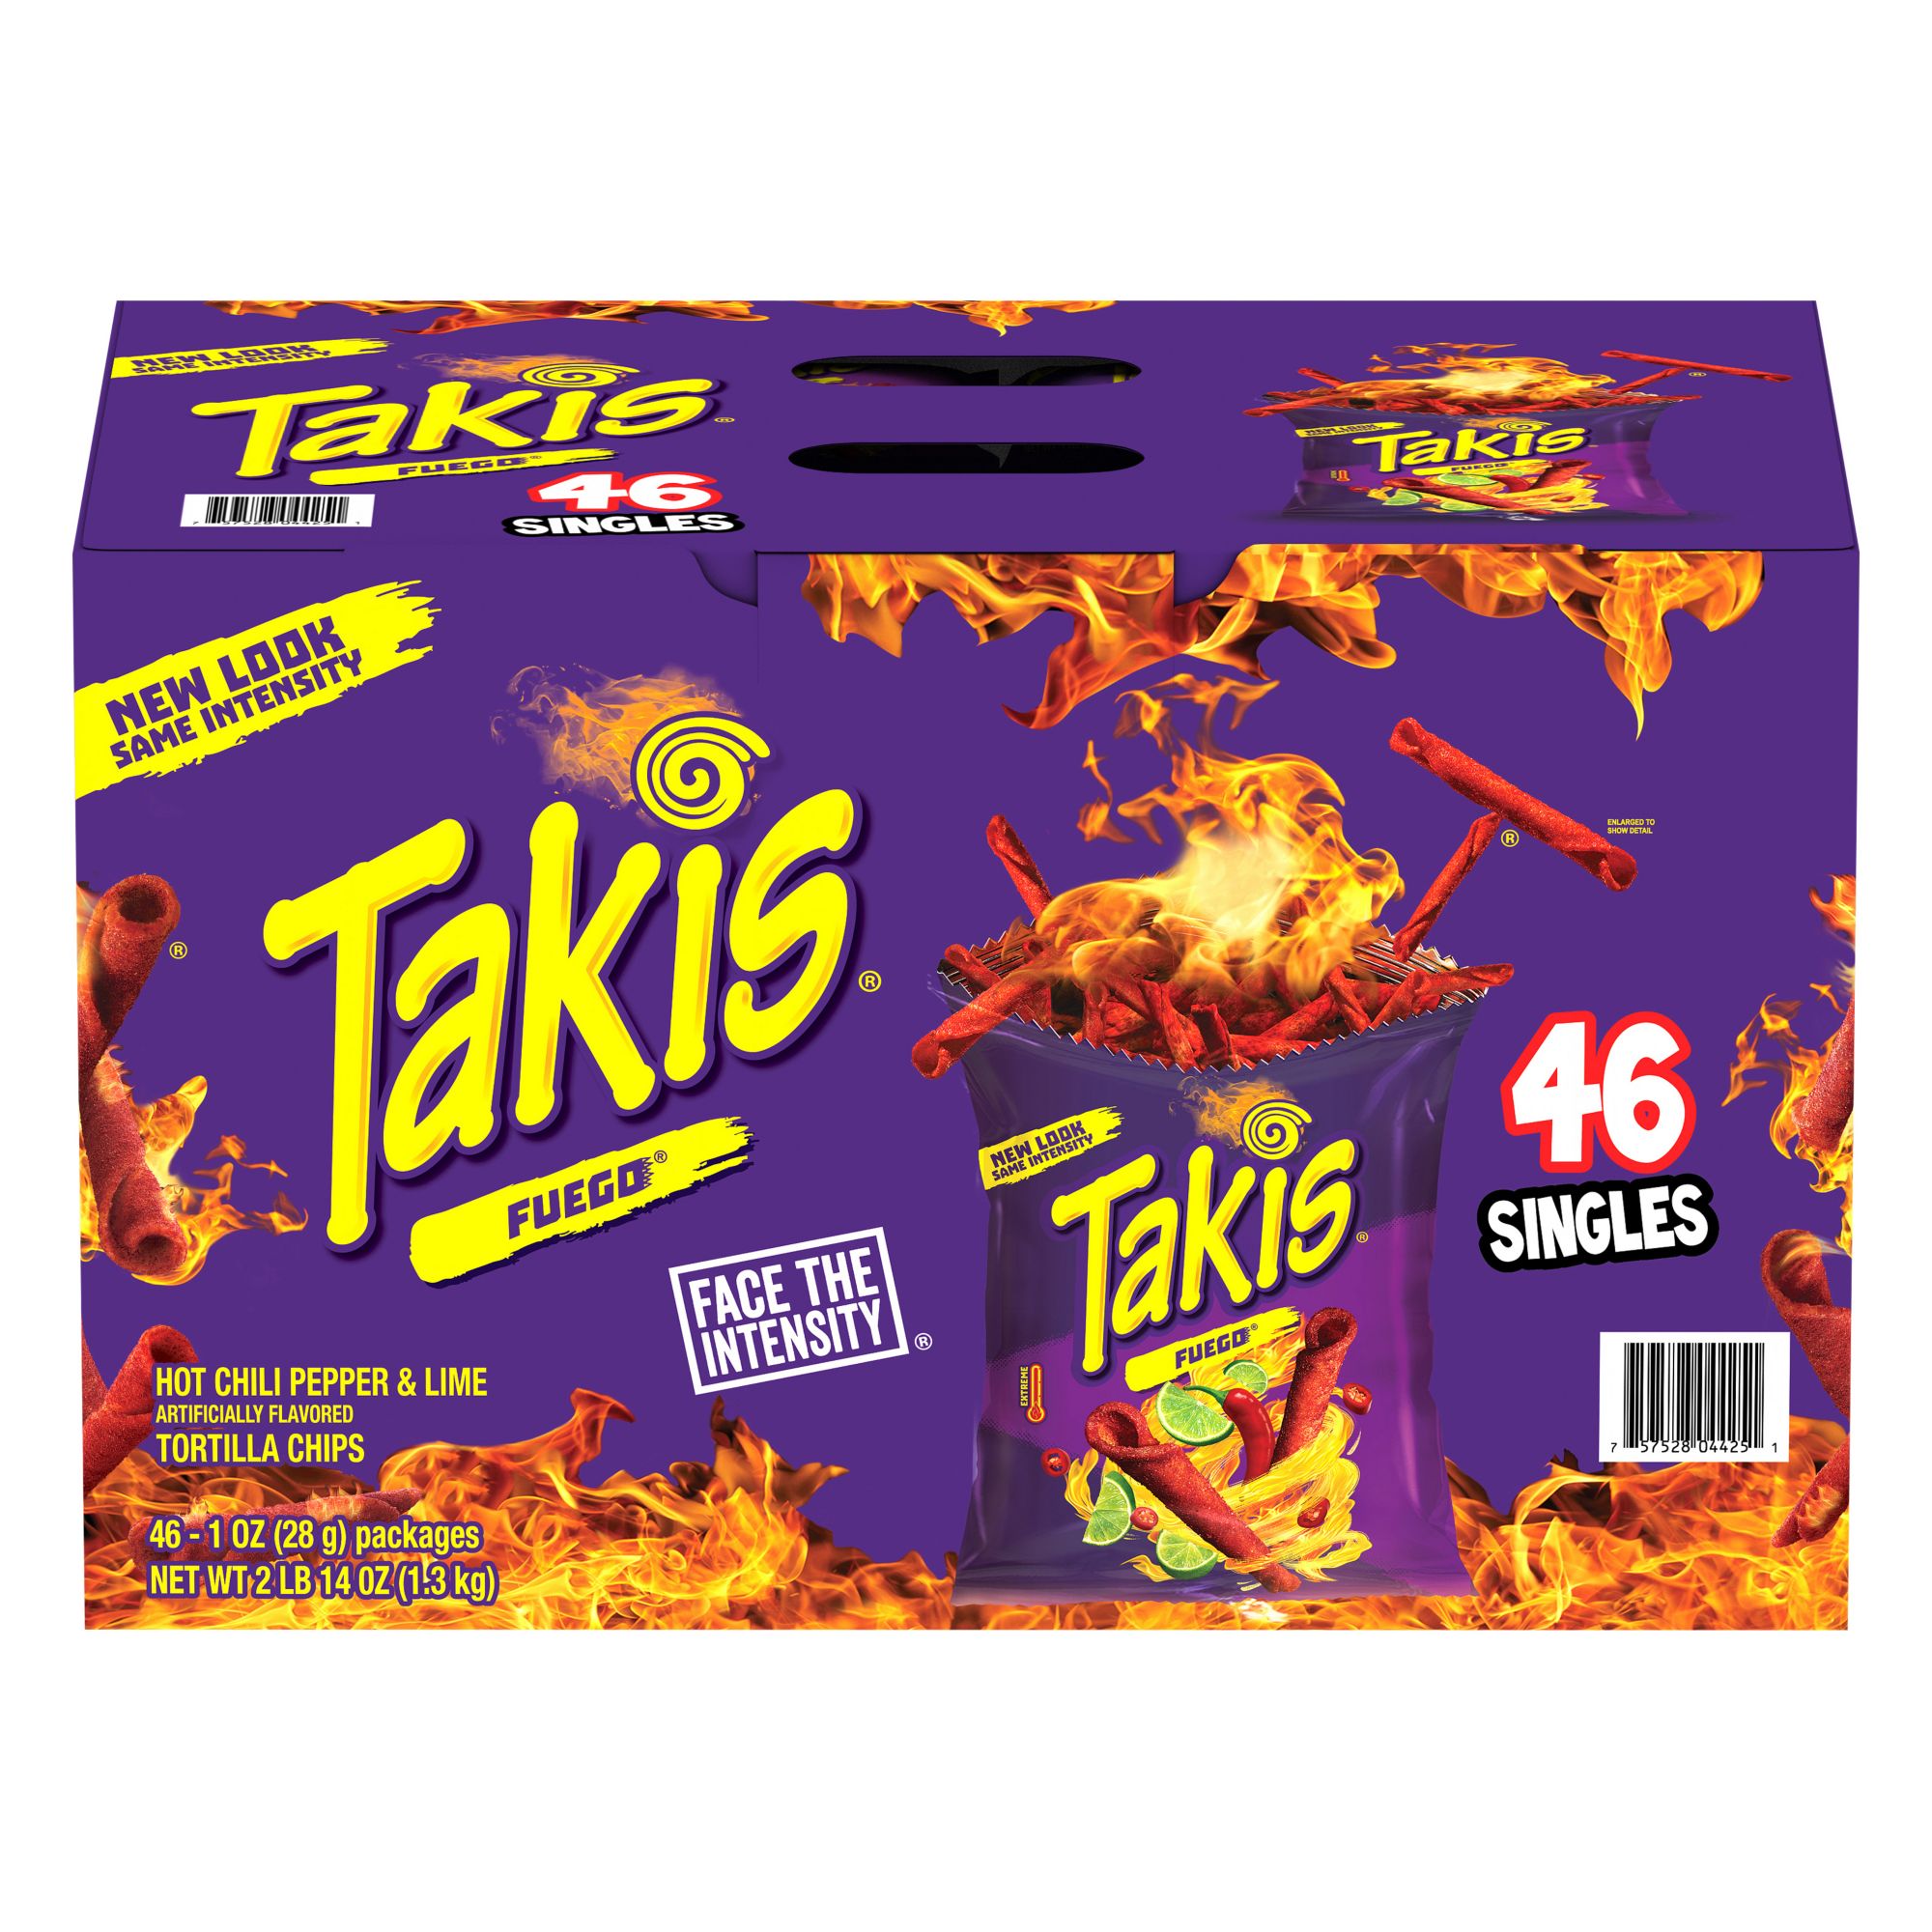 Flat Stacks Snack Pack Set > 12 oz x 3